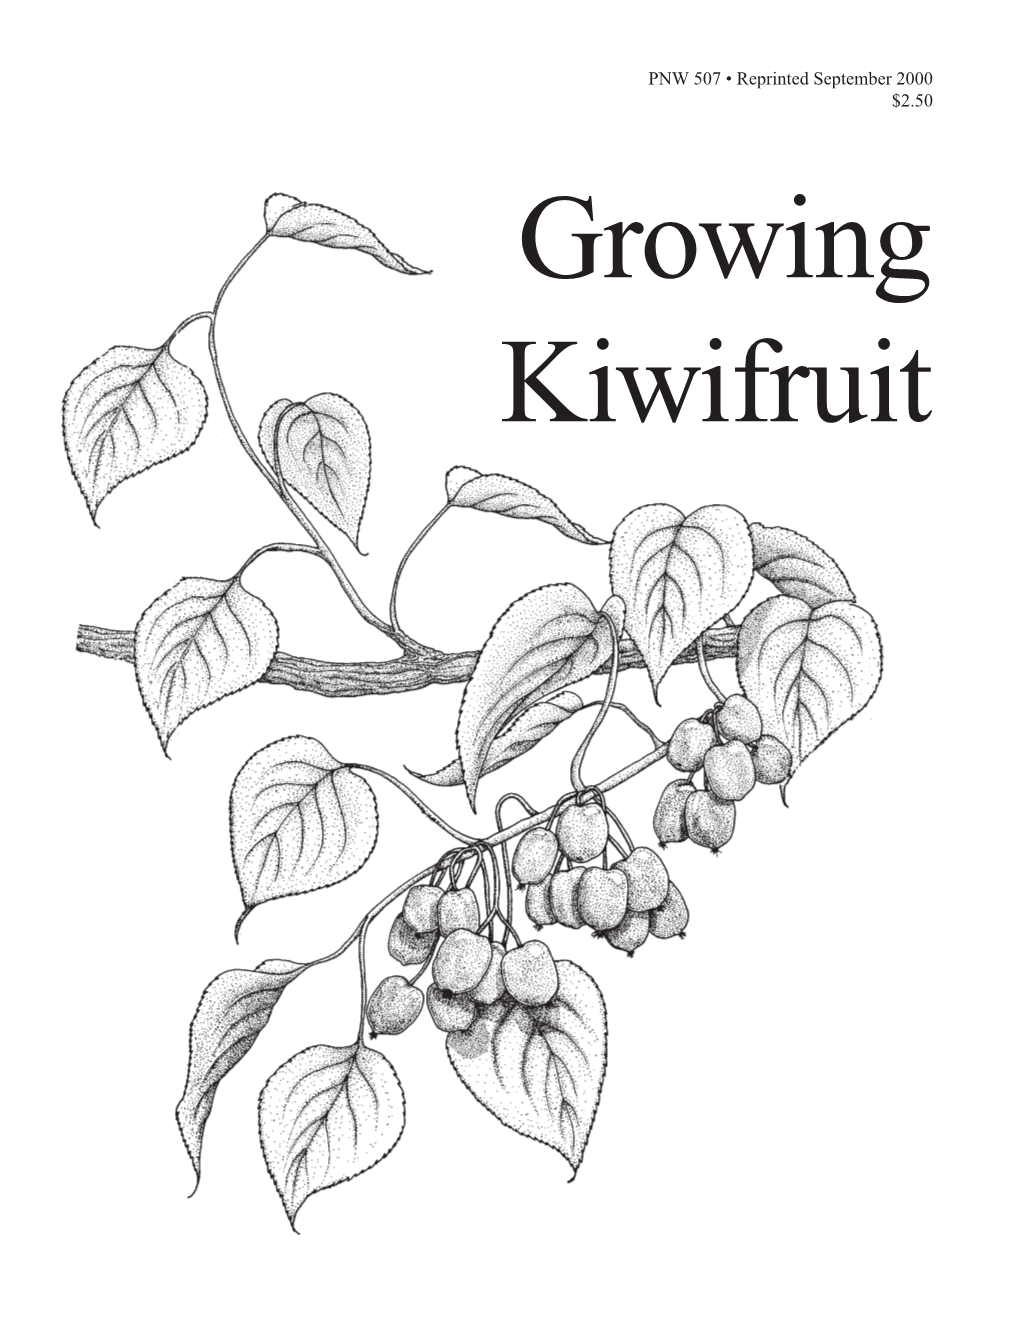 Growing Kiwifruit Contents